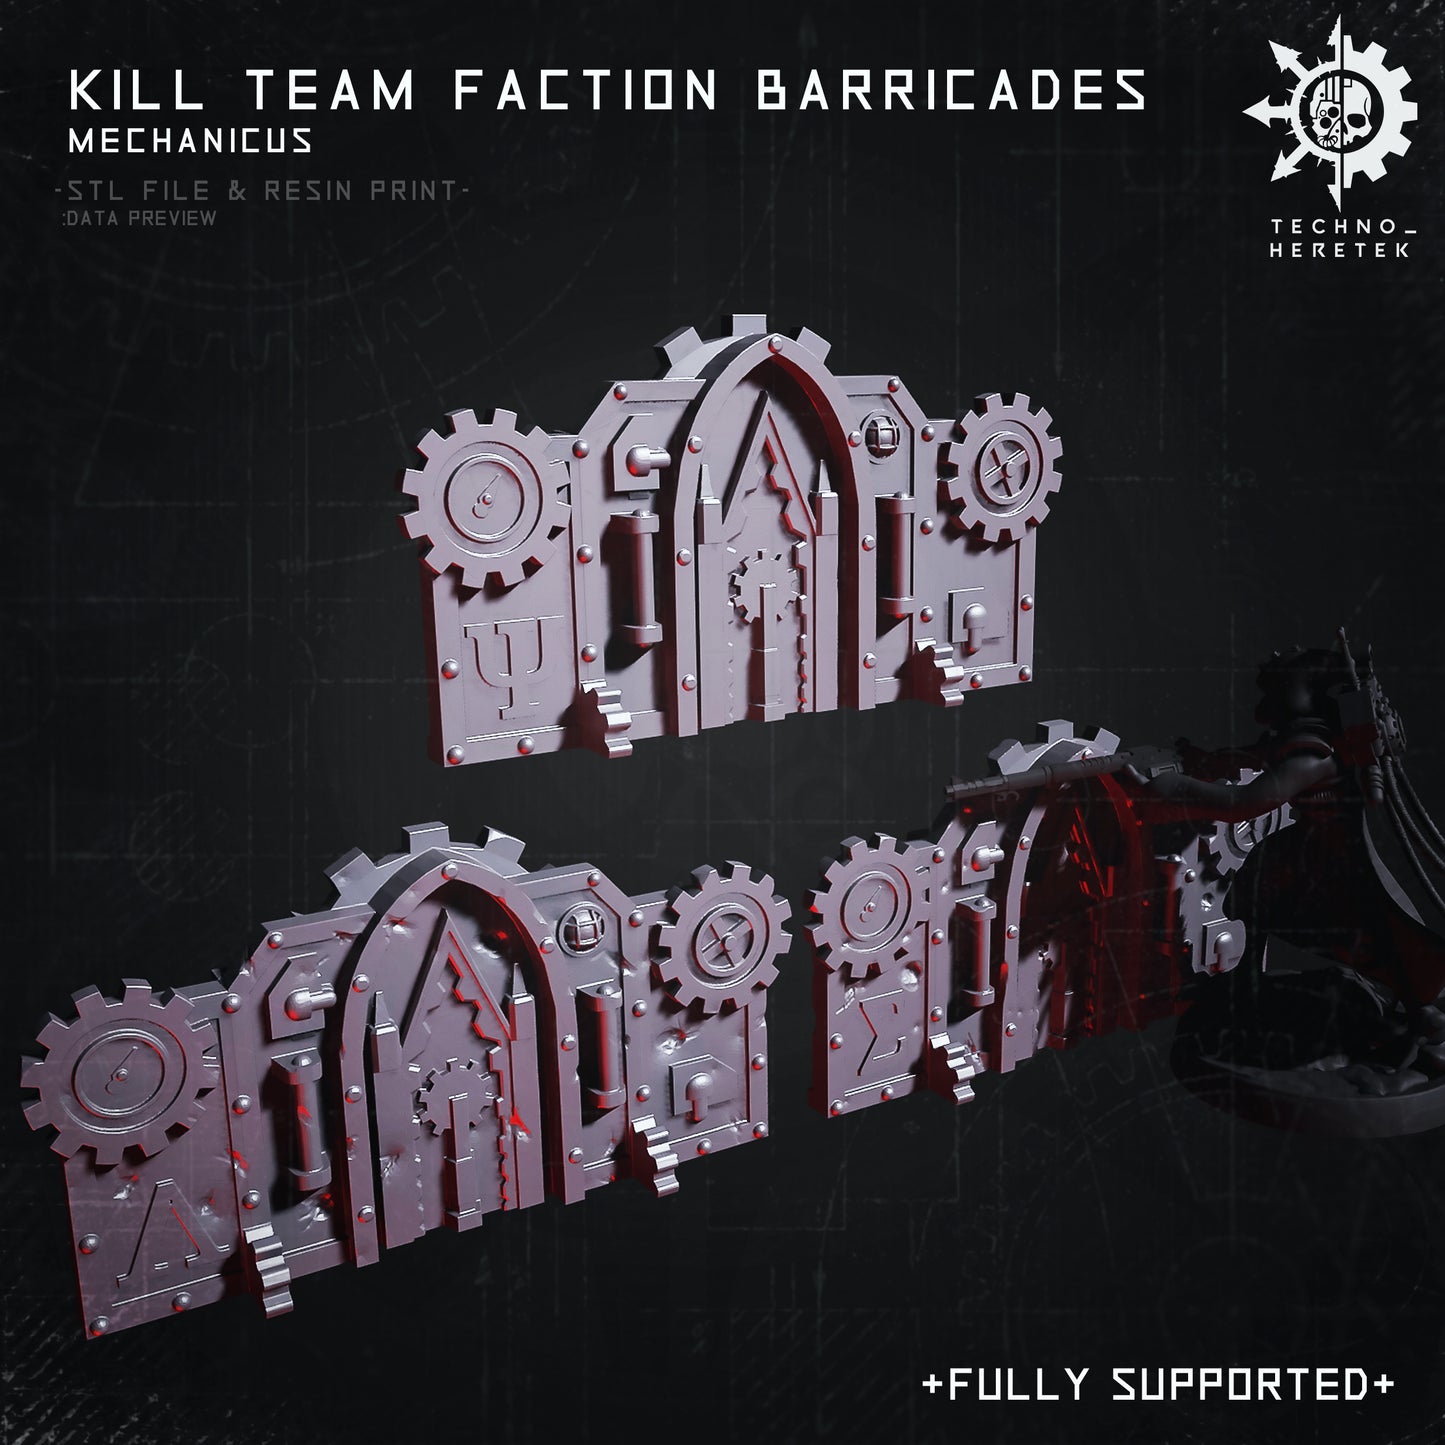 Mechanicus Faction Barricade for Kill team - STL File Pack